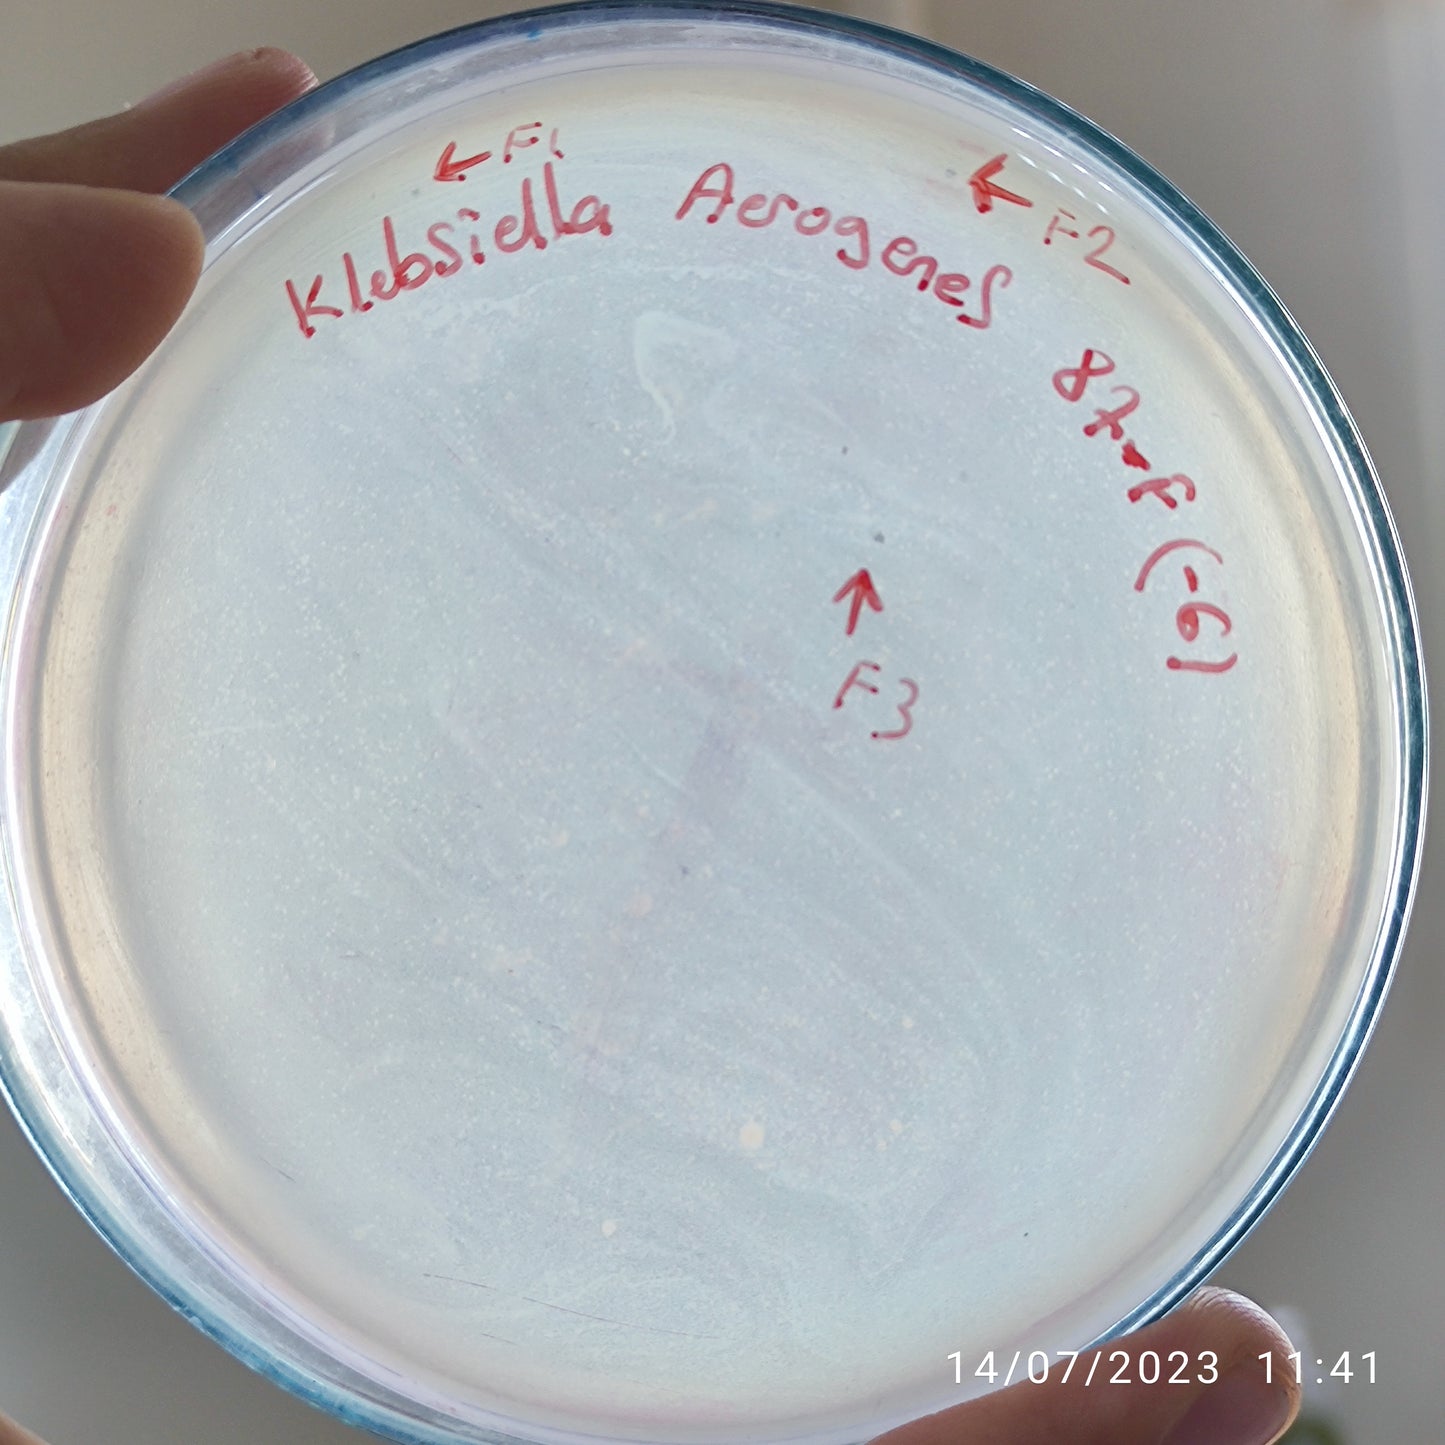 Klebsiella aerogenes bacteriophages 188087F